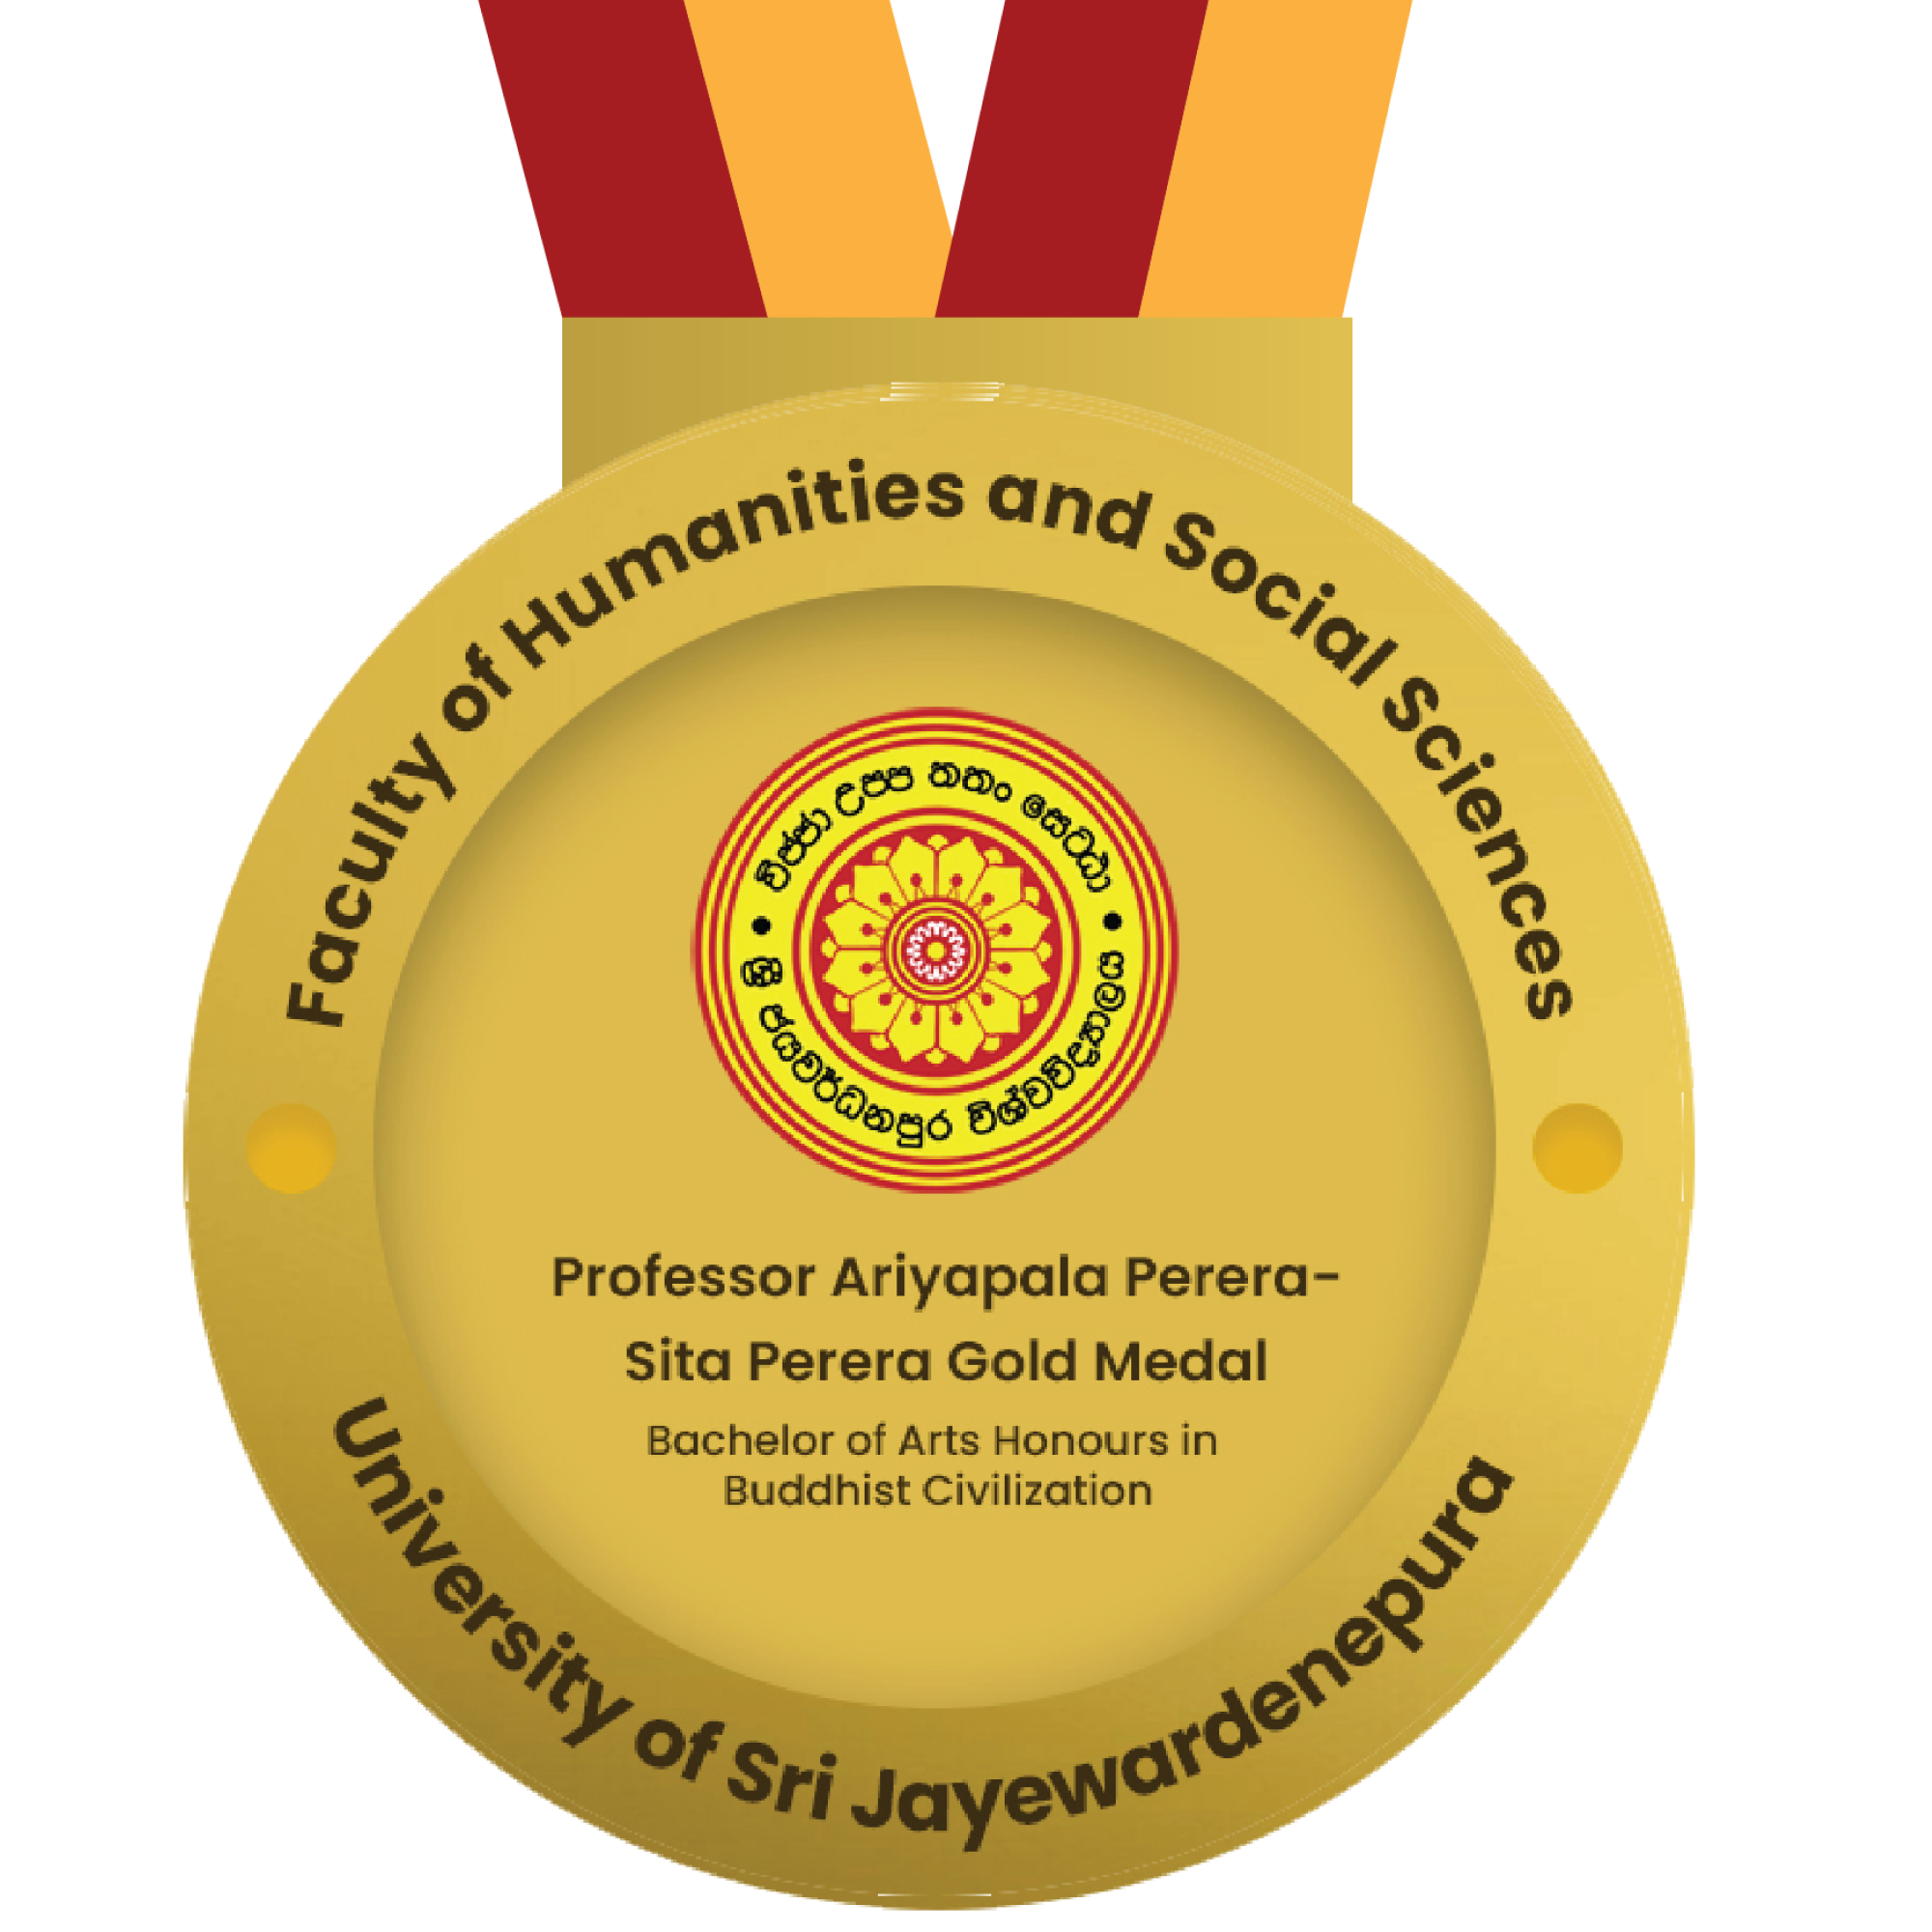 Professor Ariyapala Perera-Sita Perera Gold Medal